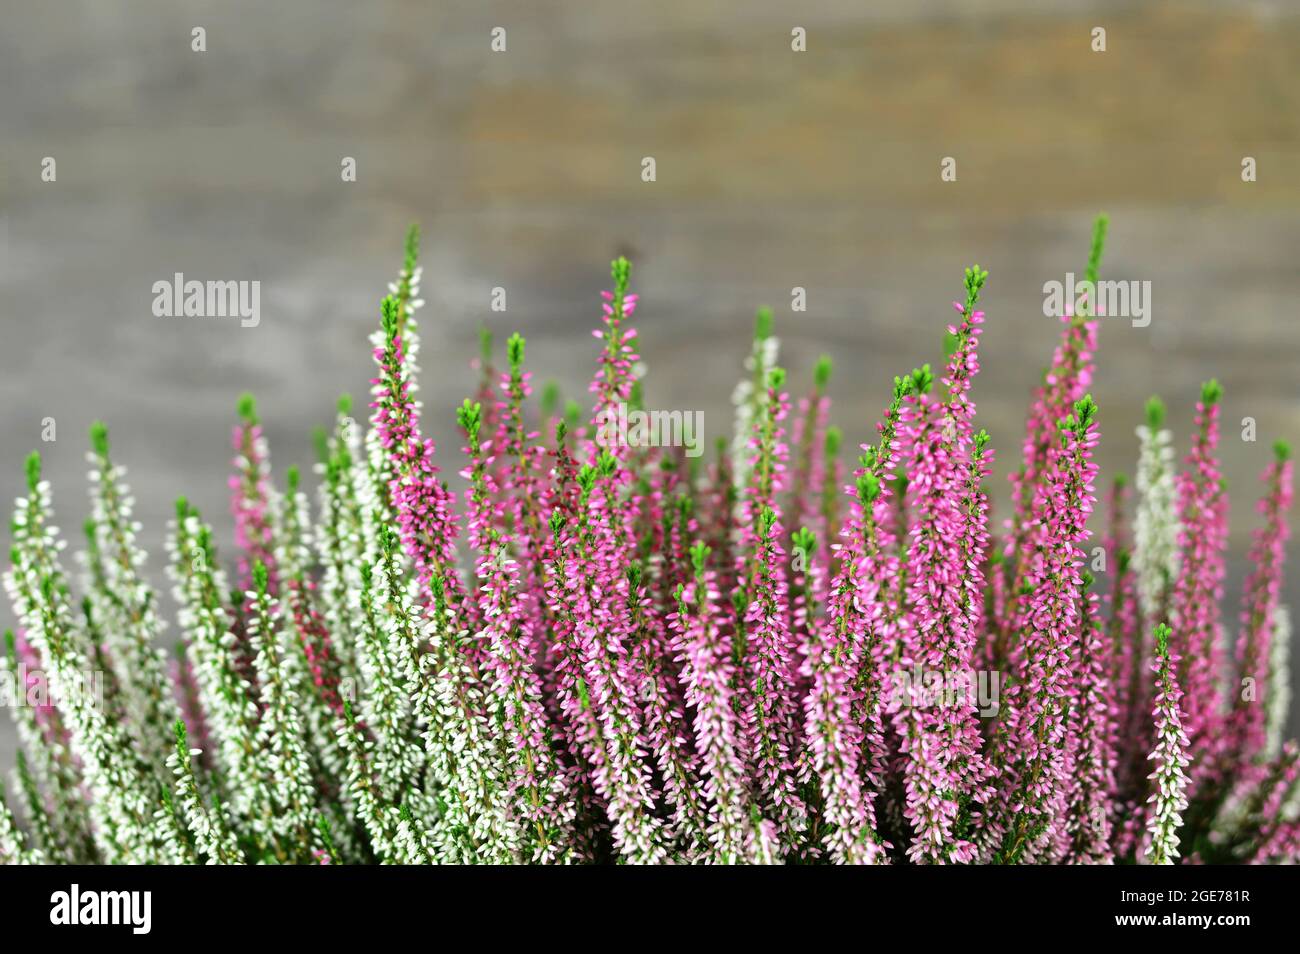 Heather flowers on wooden background. Pink and white Calluna vulgaris border Stock Photo